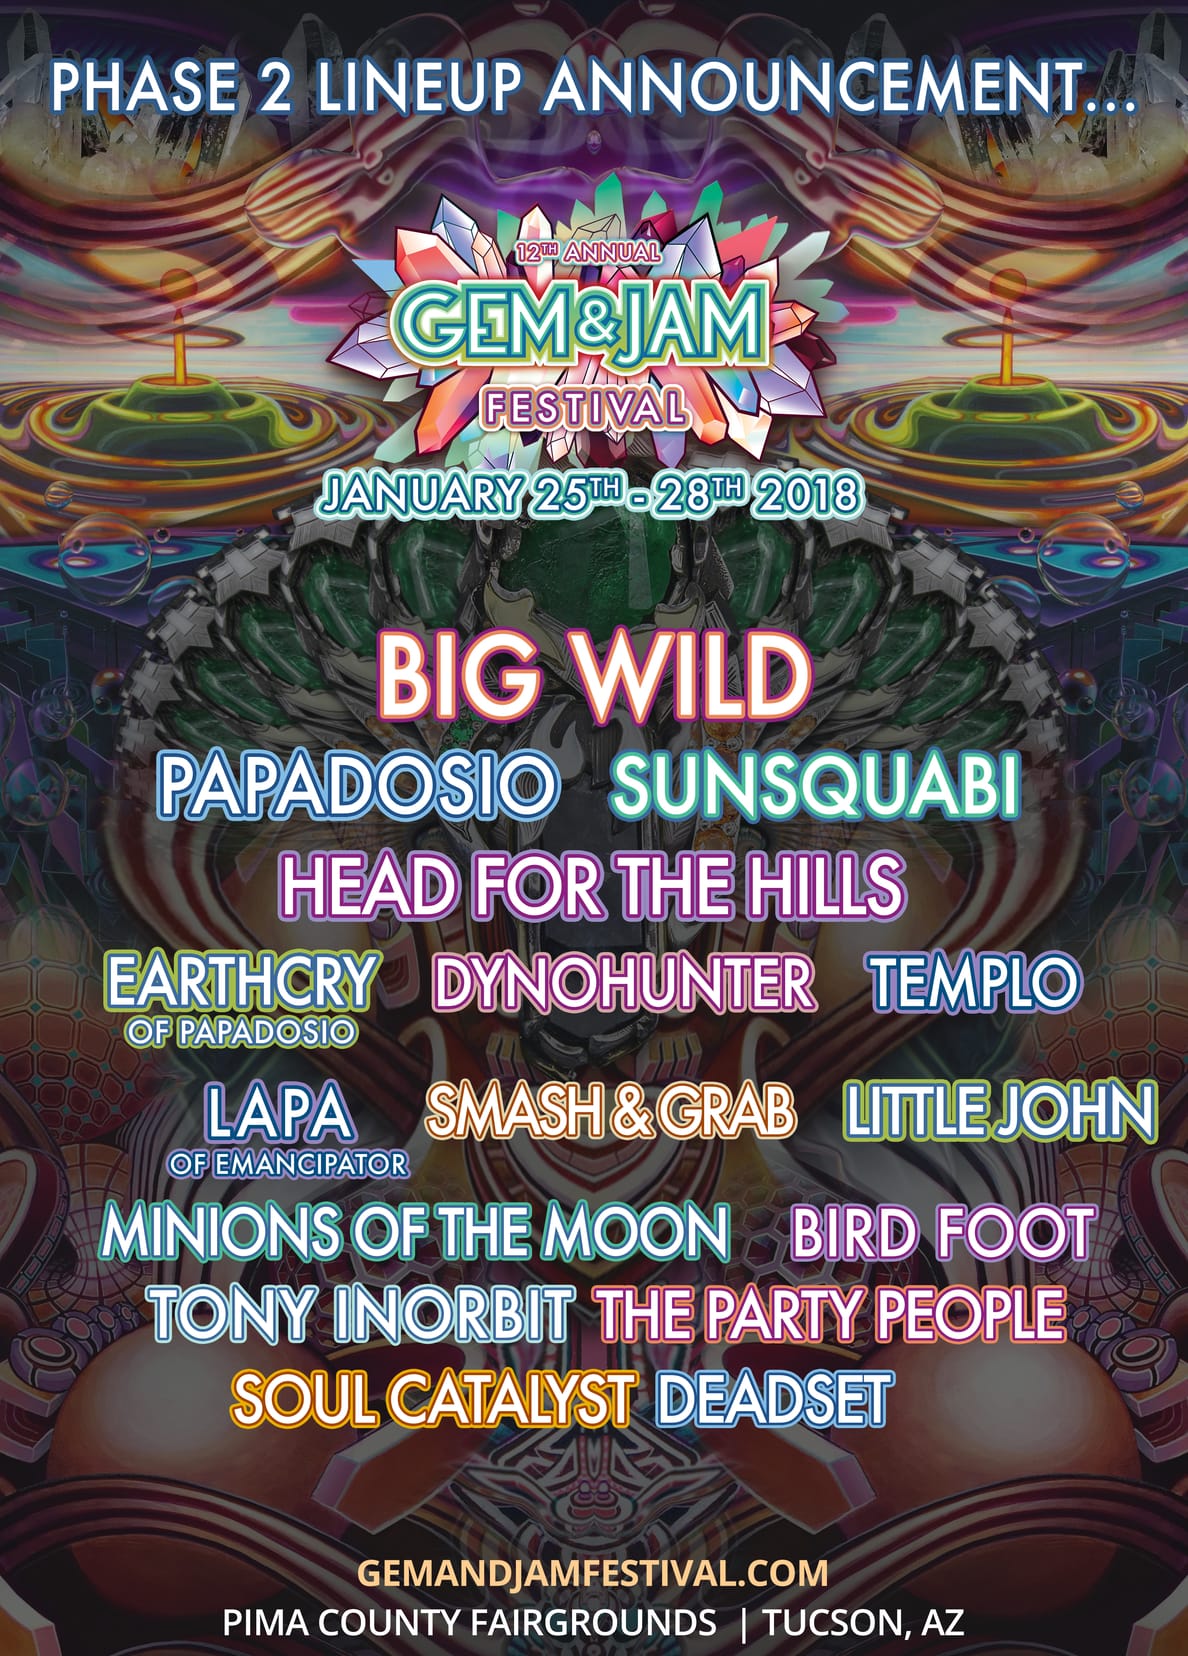 Gem & Jam Festival Phase 2 Lineup